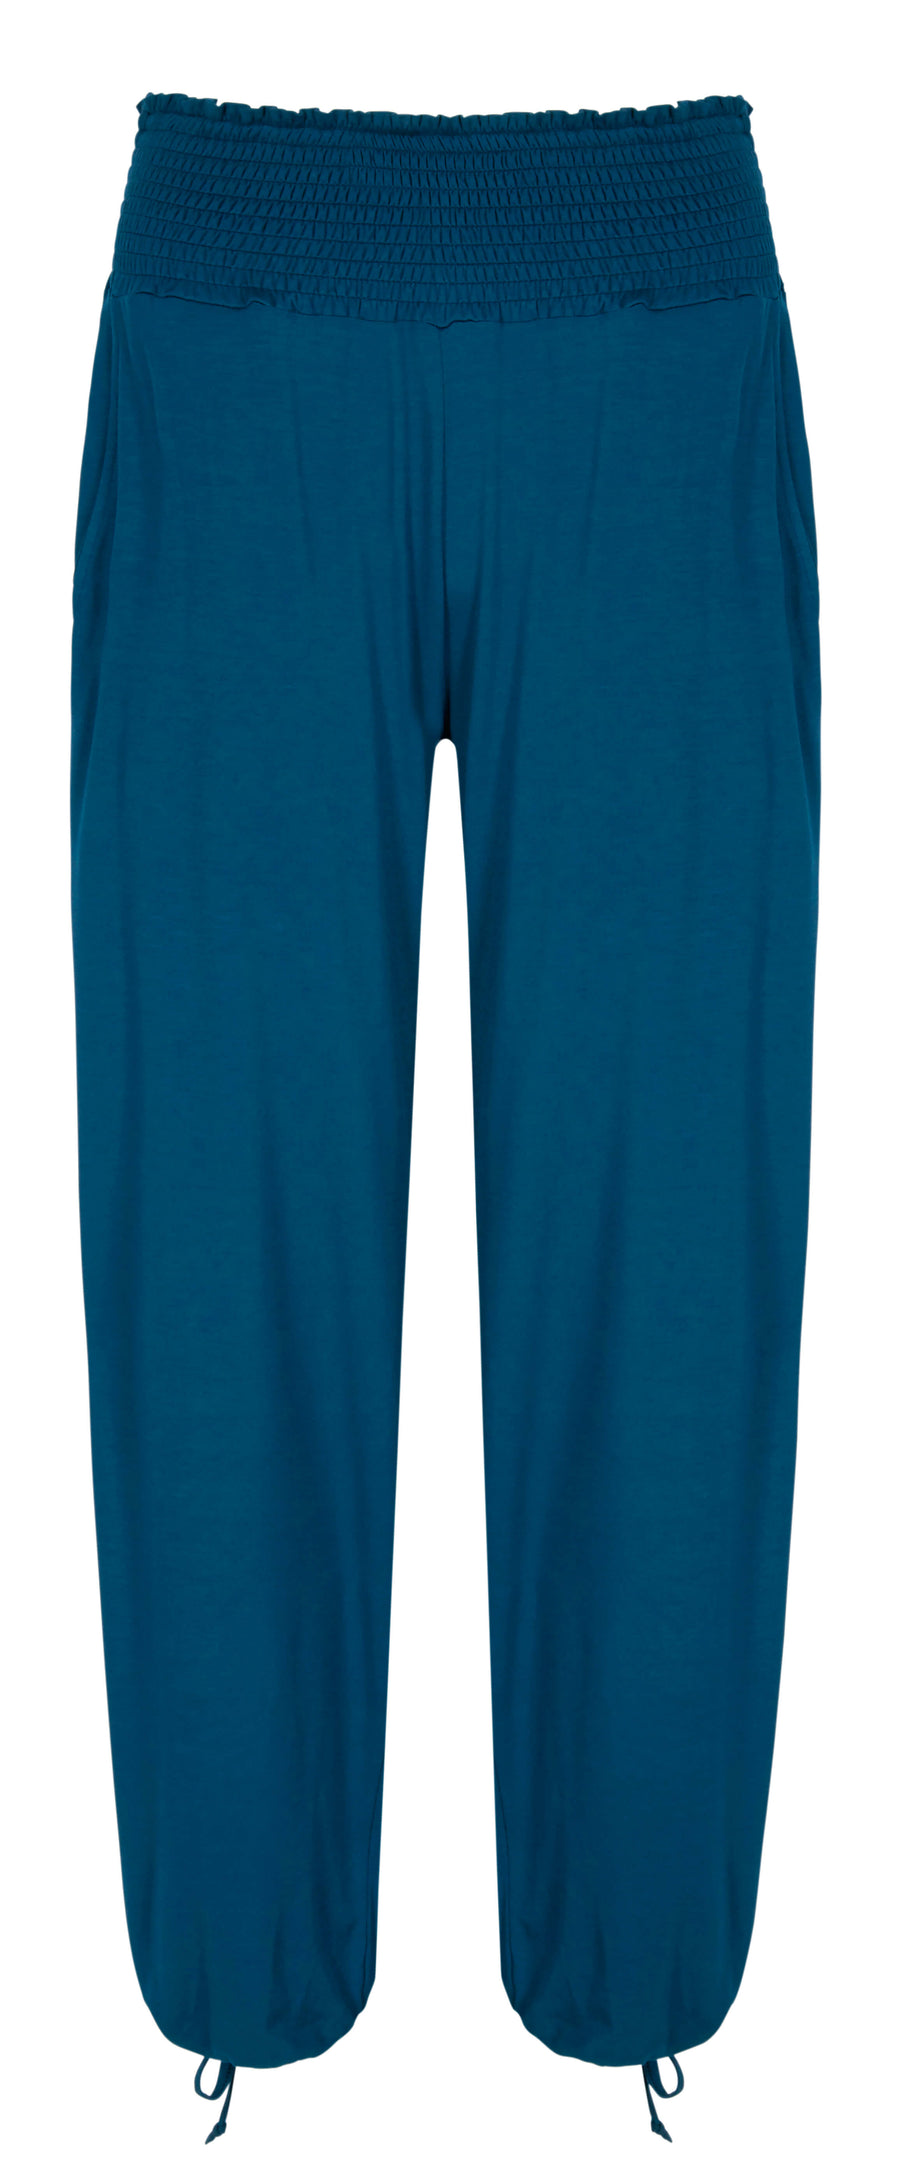 Dreamer Pants - Marine Blue - Regular